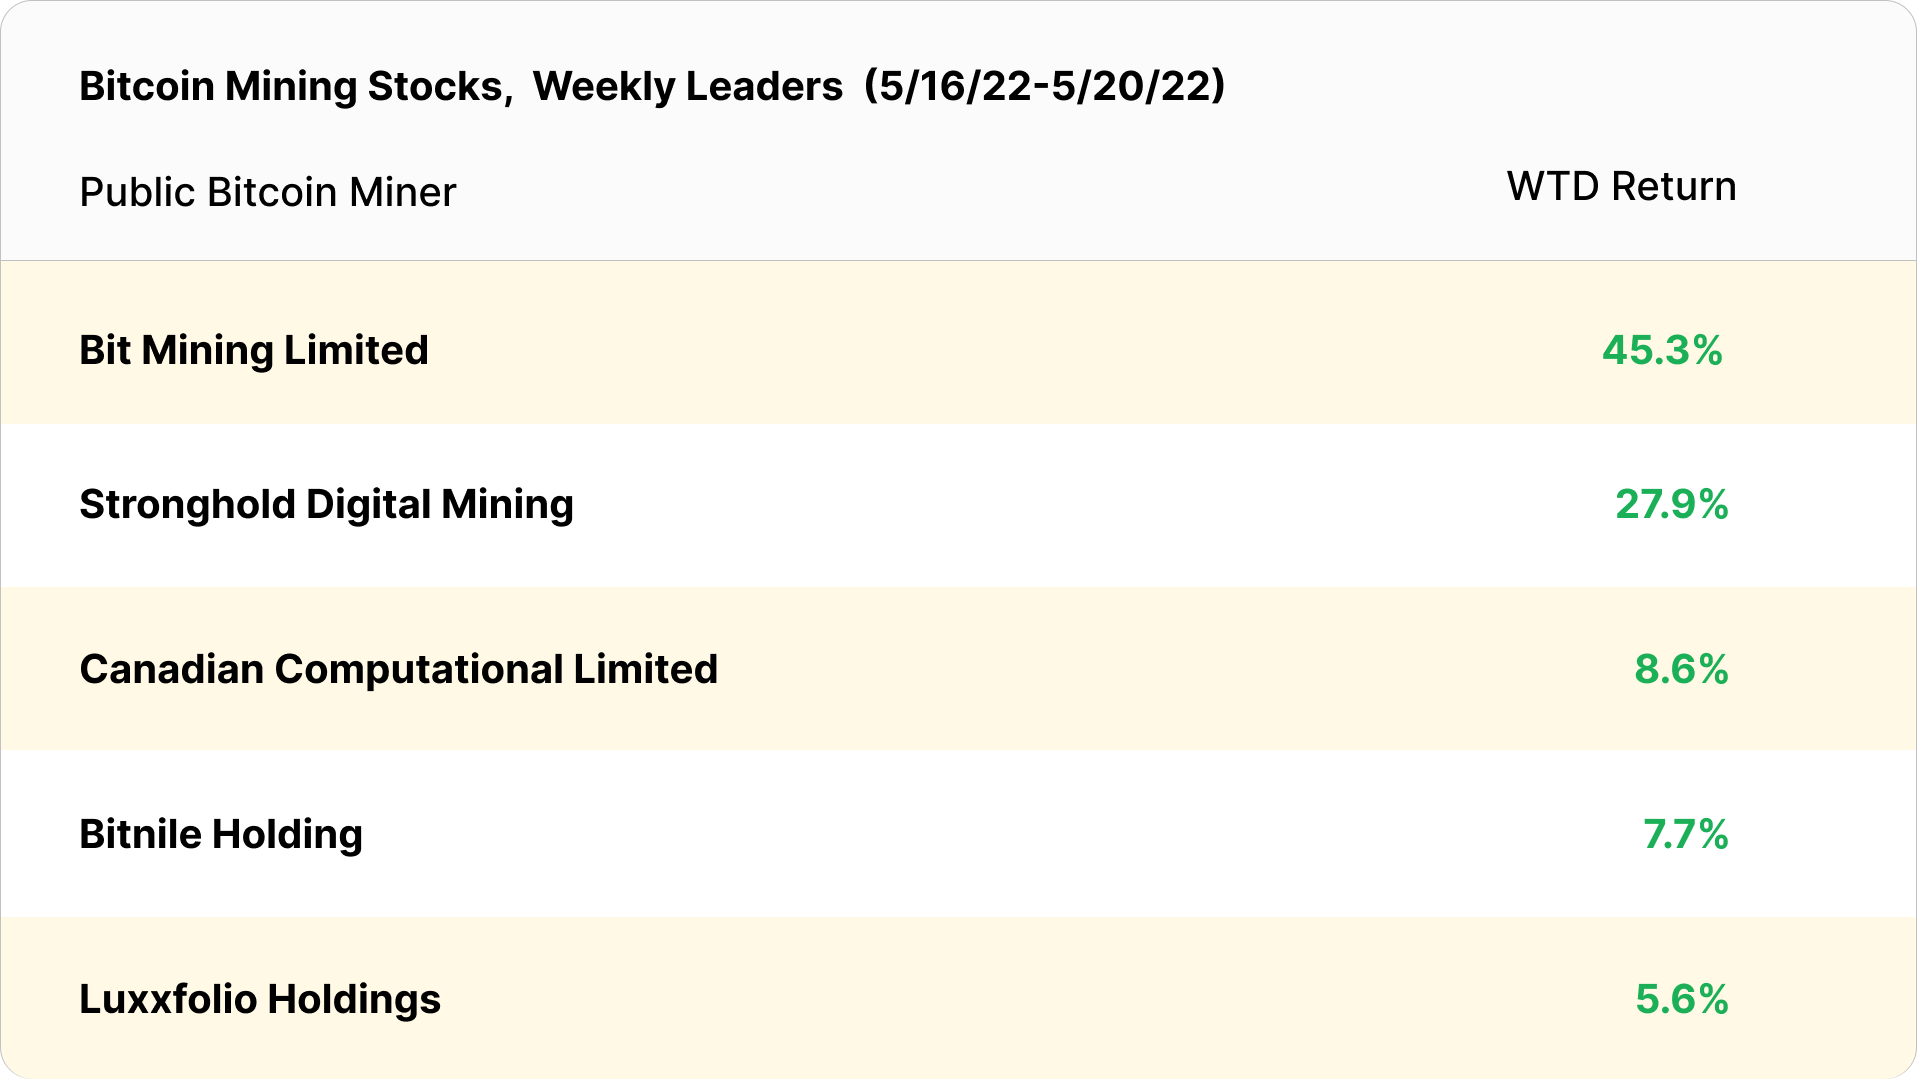 Bitcoin mining stock week leaders (May 16-20, 2022)